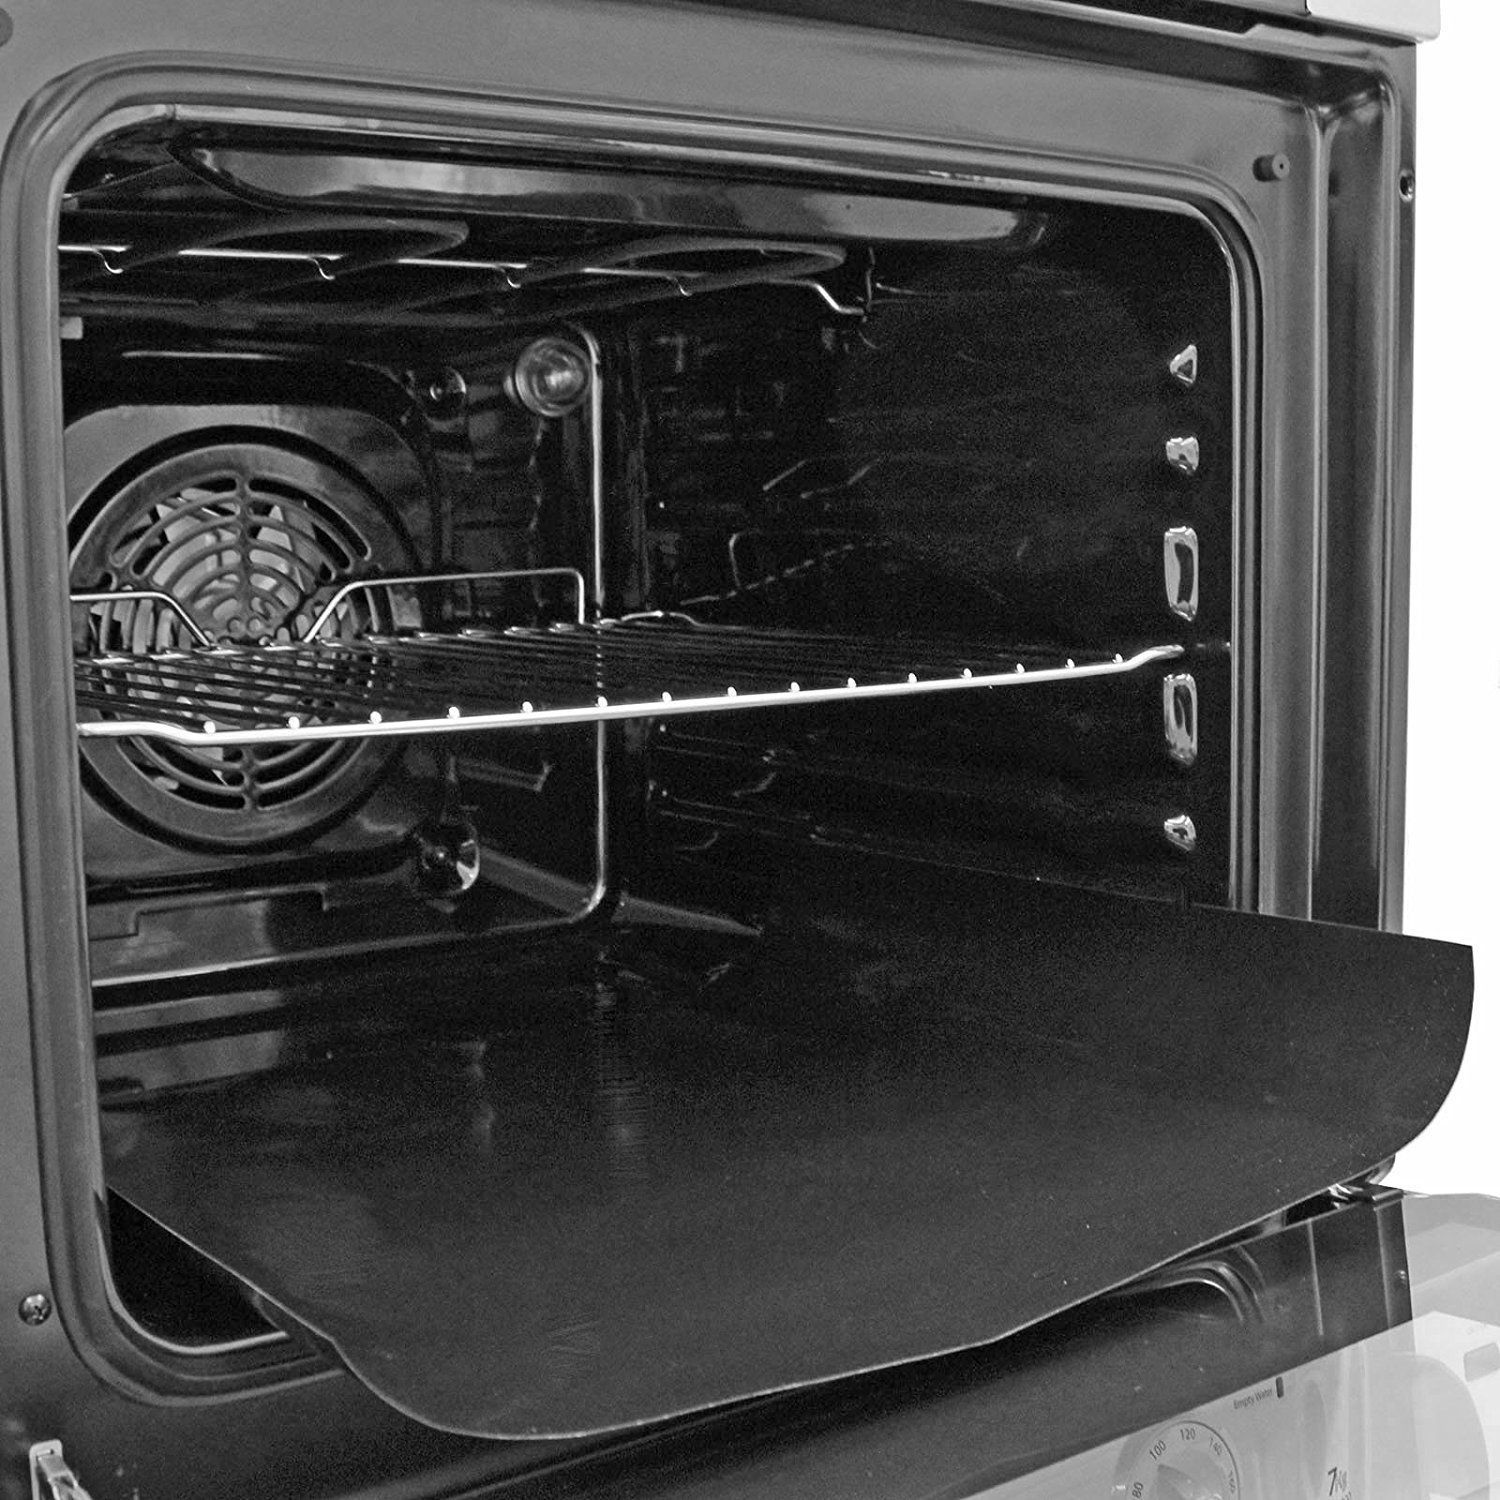 2pcs Large Nonstick Oven Reusable Liner, Oven Liner Mat